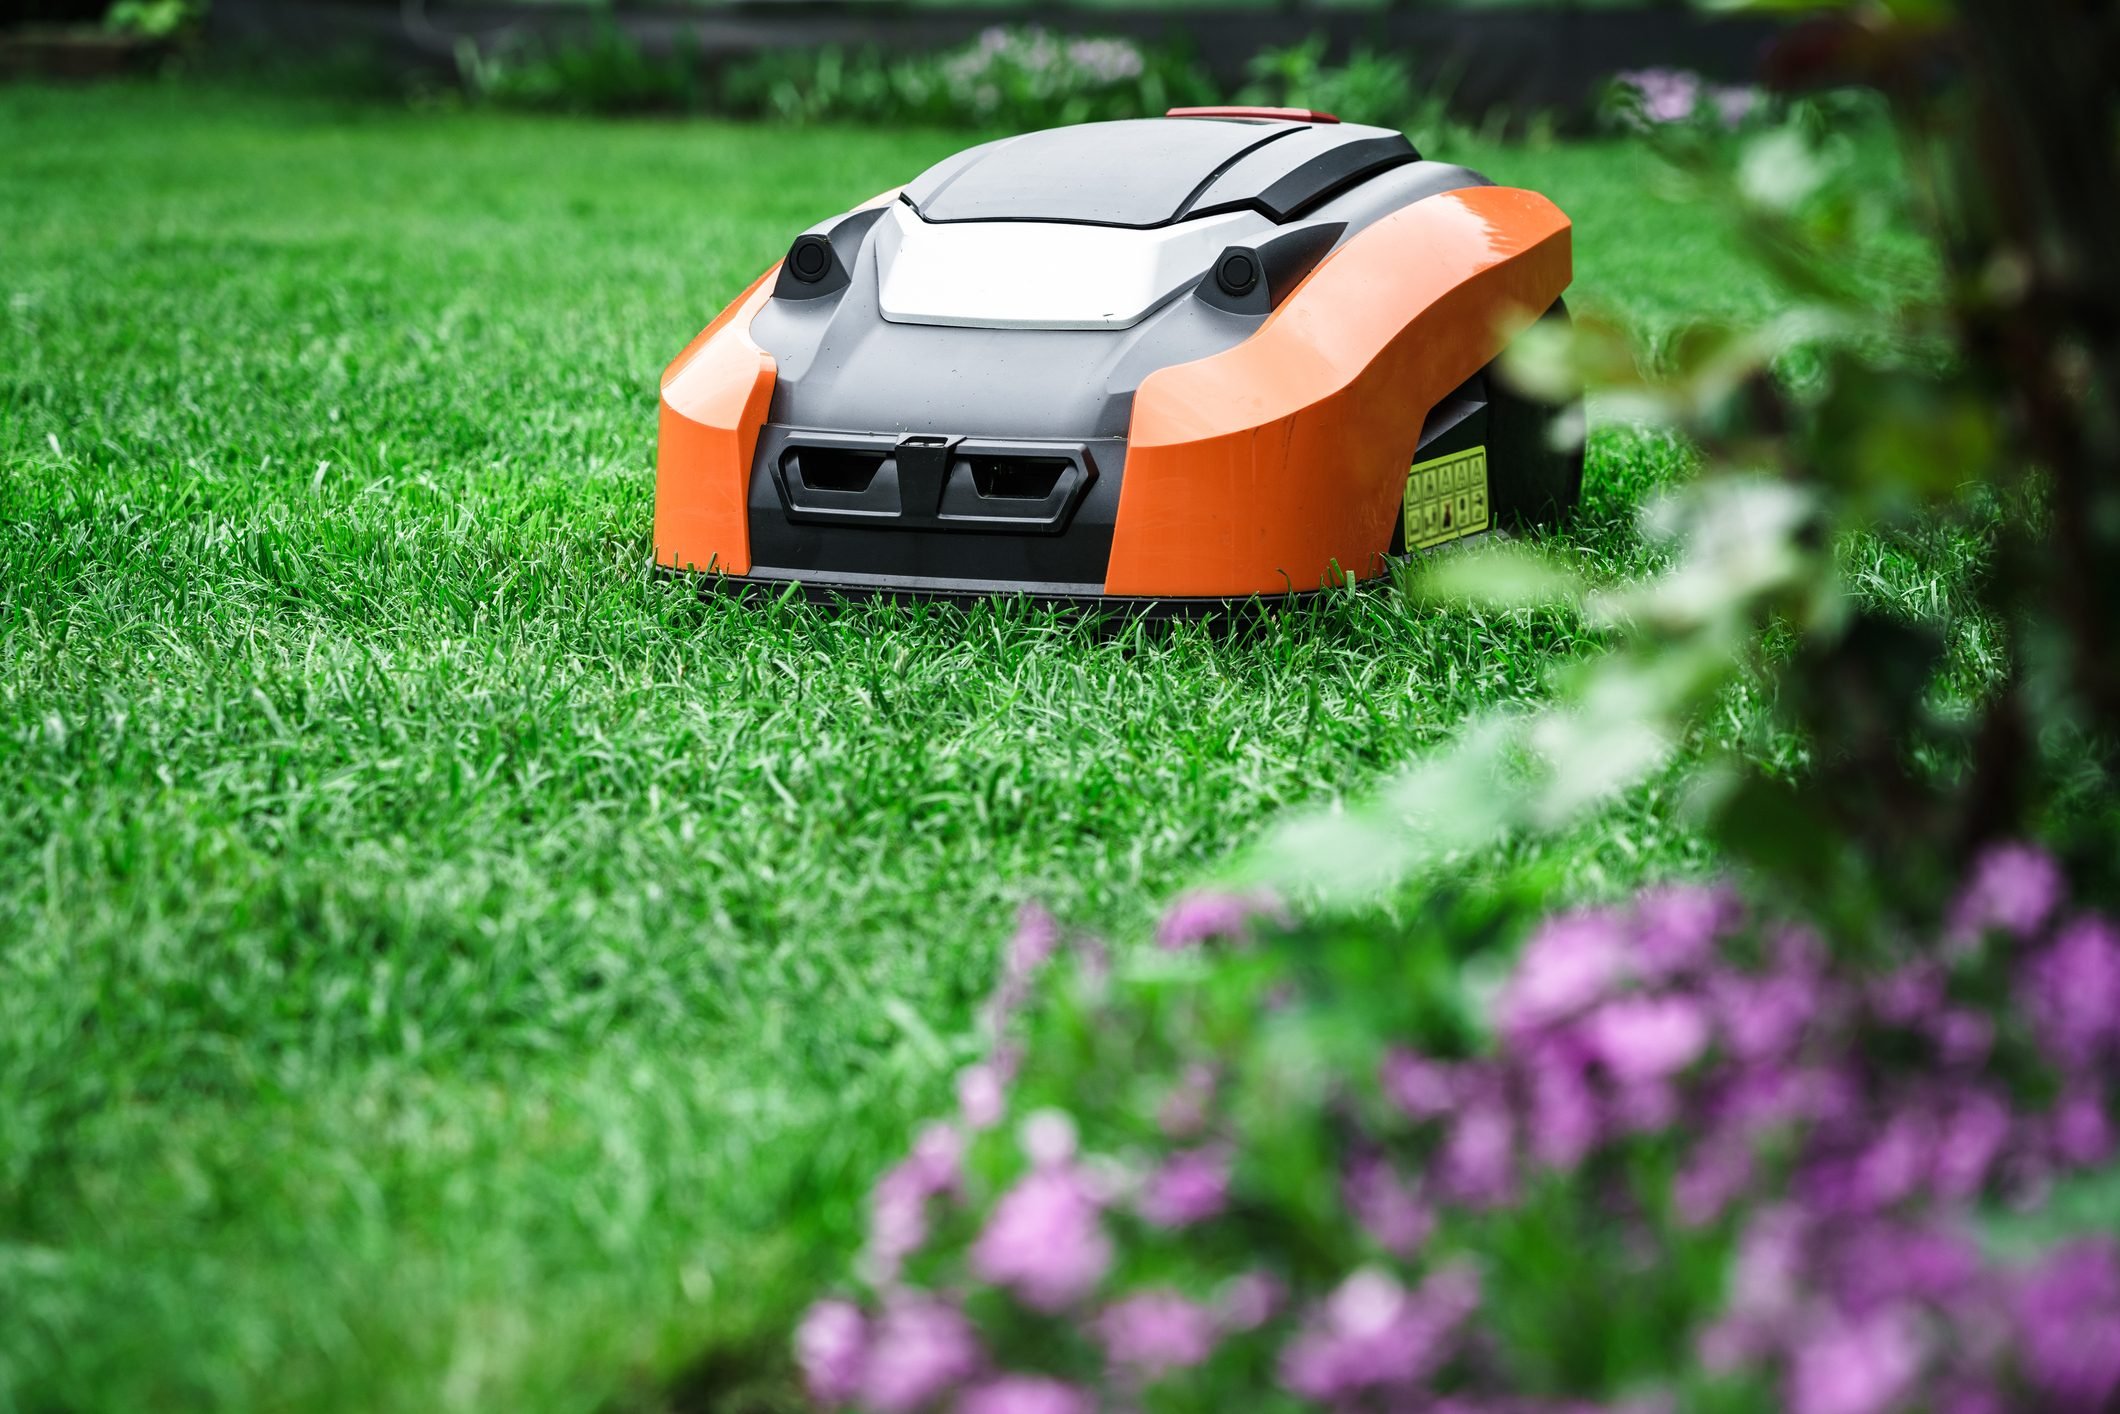 STIHL Just Recalled a Robotic Lawn Mower Docking Station